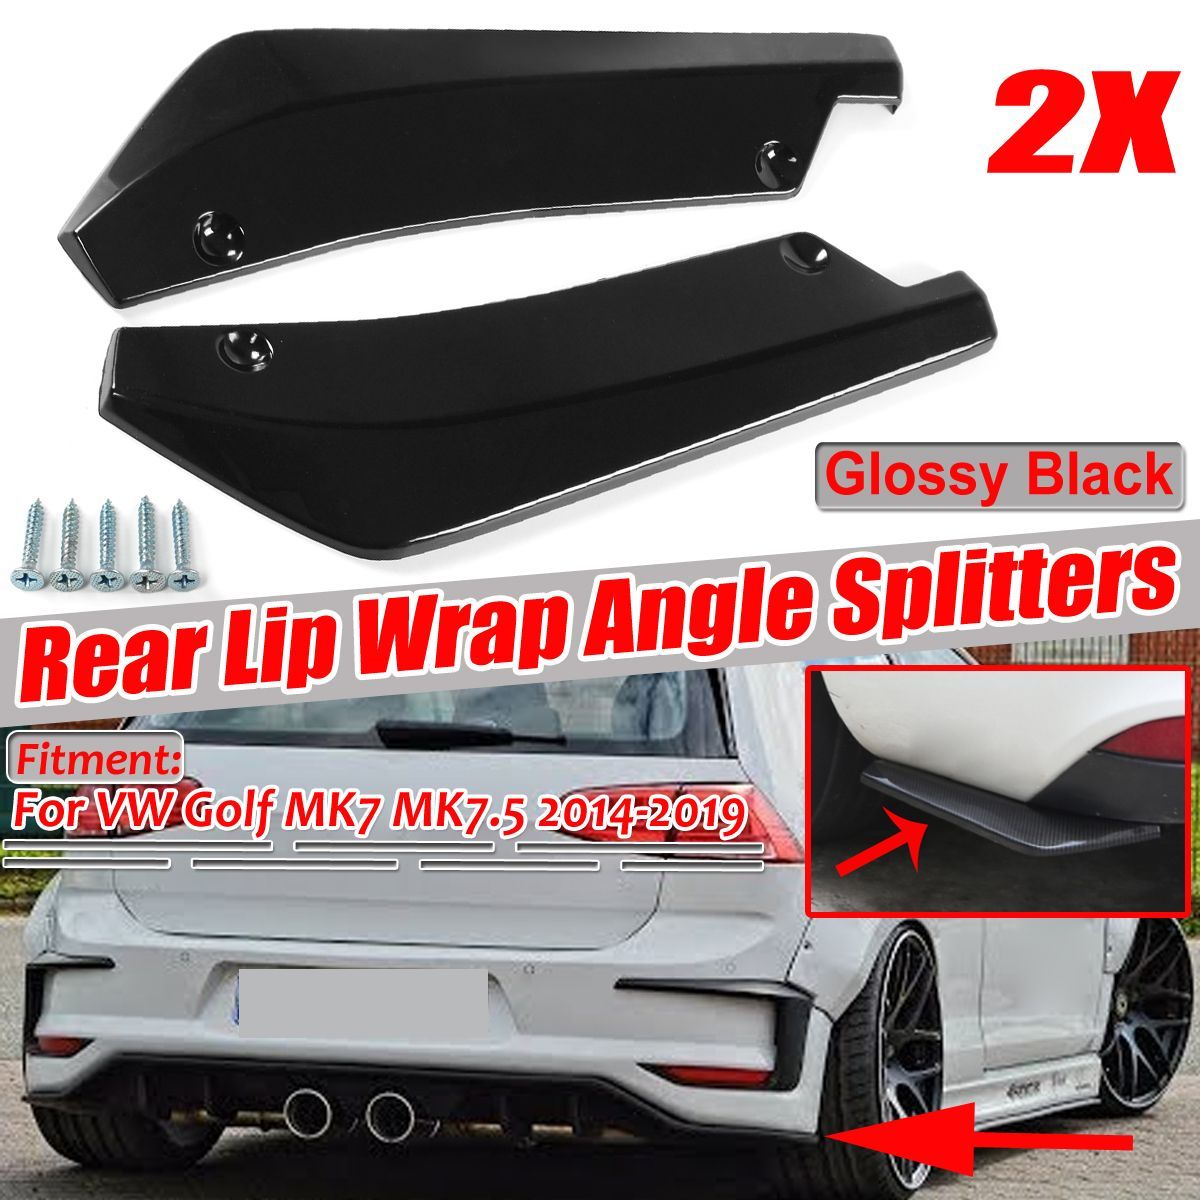 Universal-Car-Rear-Bumper-Protector-Lip-Wrap-Angle-Splitters-Bright-Black-2pcs-1357801